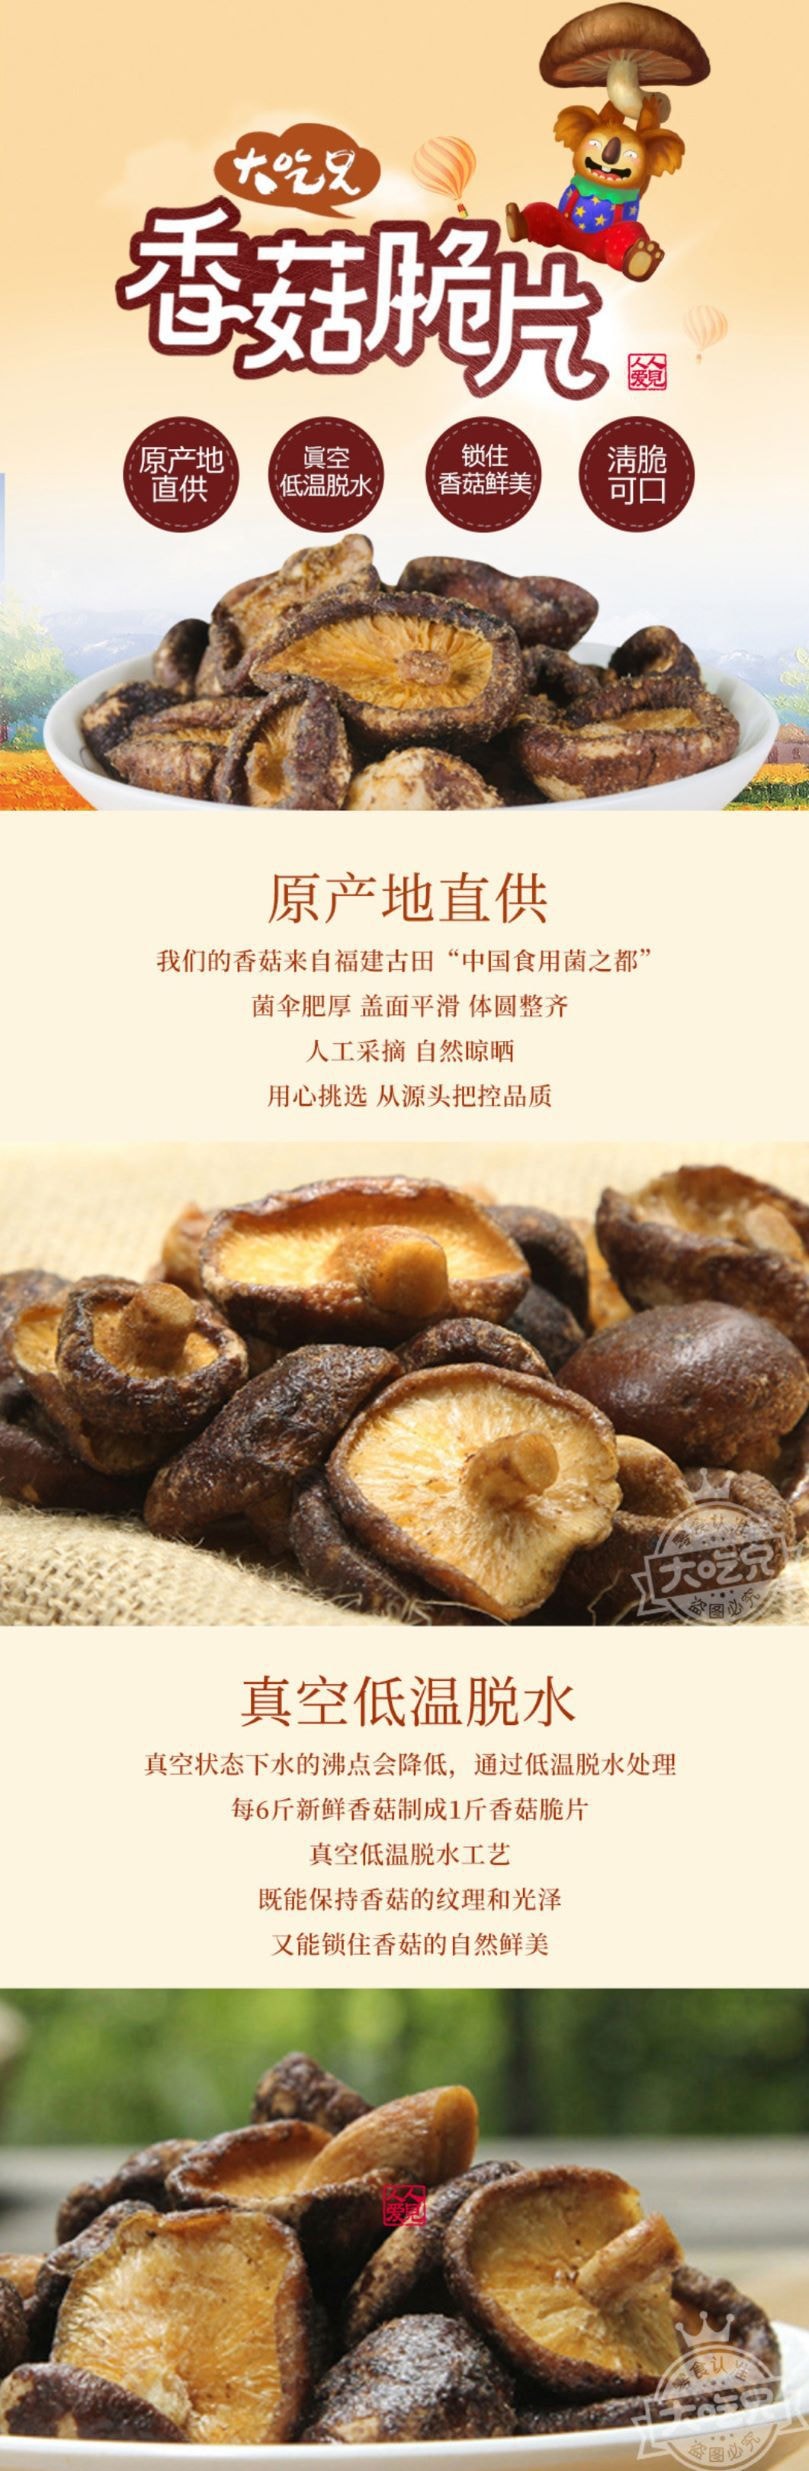 LIARY Hand-shaved mushrooms dried mushrooms 70g